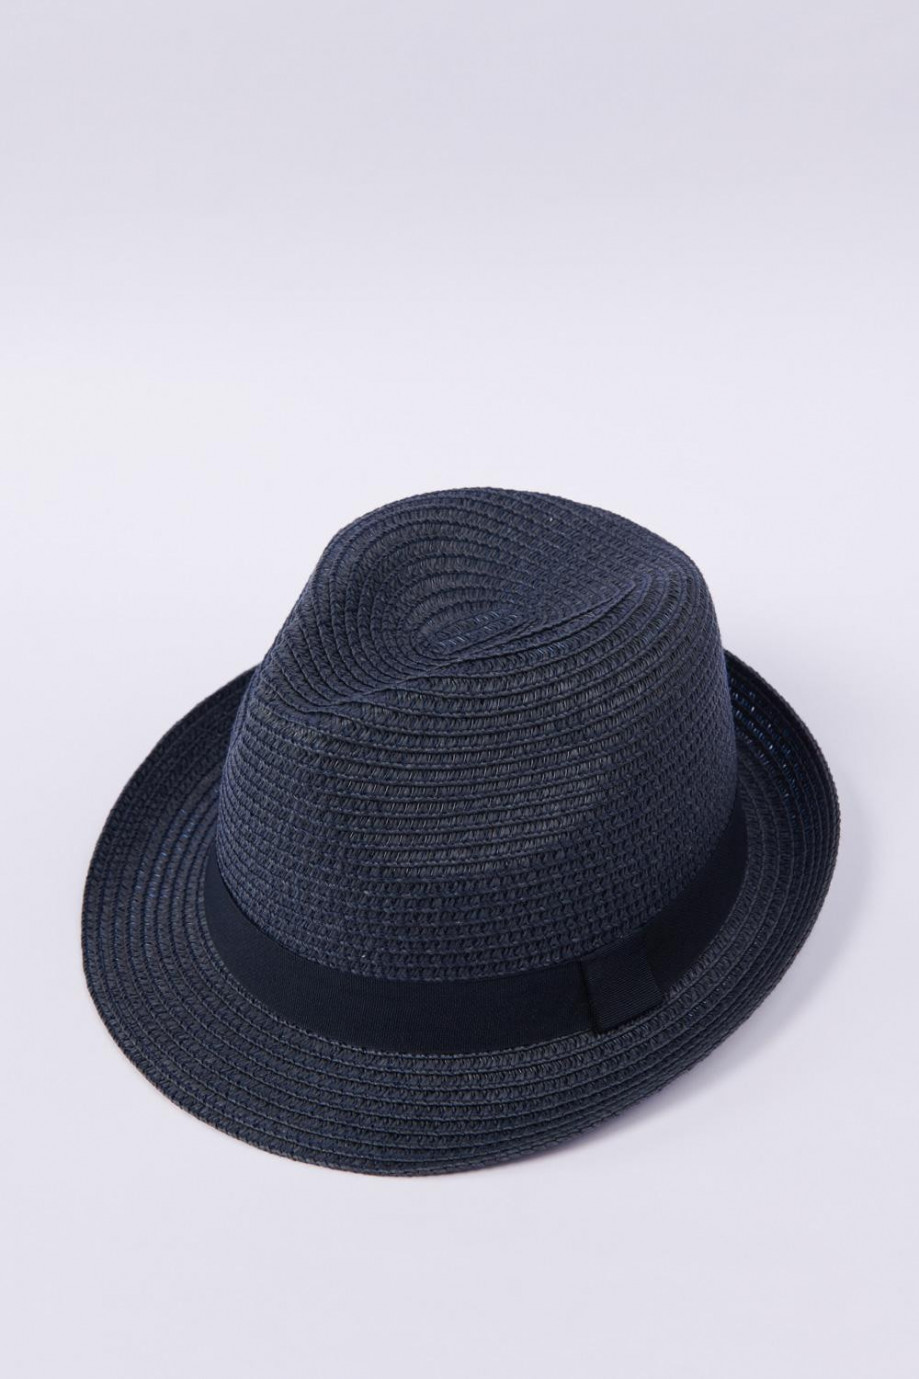 Sombrero tejido gris oscuro con cinta decorativa negra